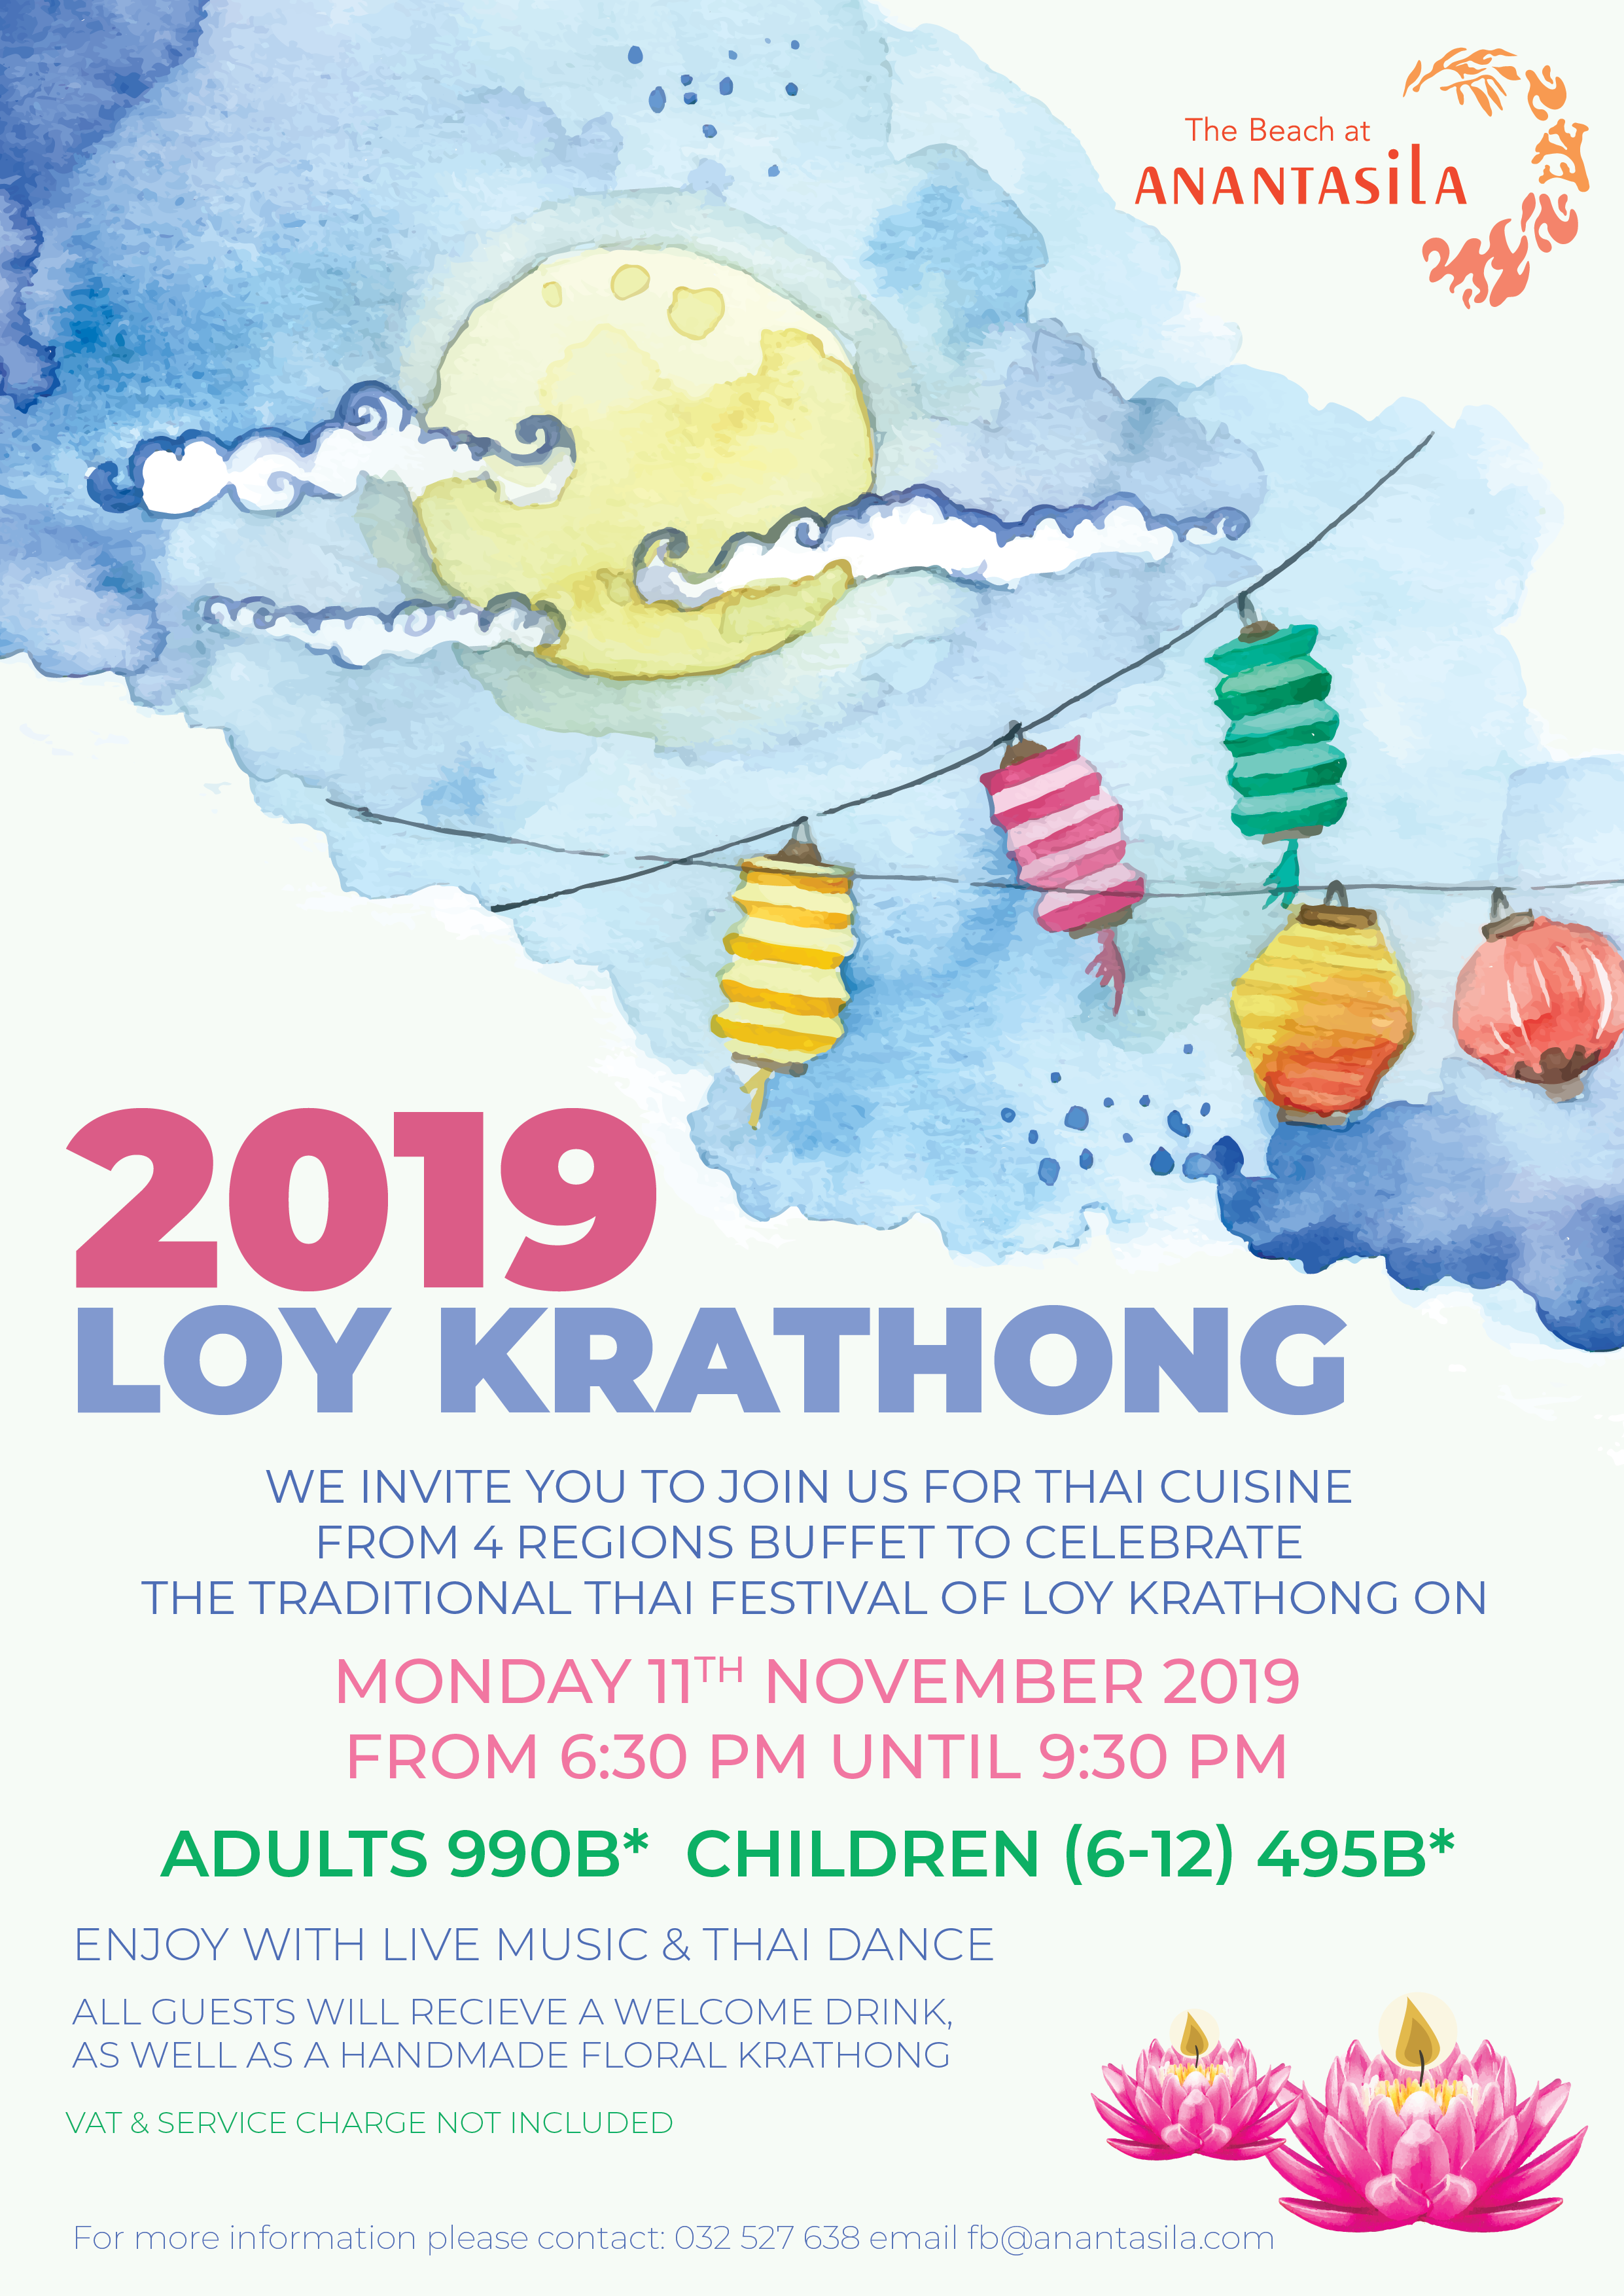 Anantasila Event Loy Krathong 2019